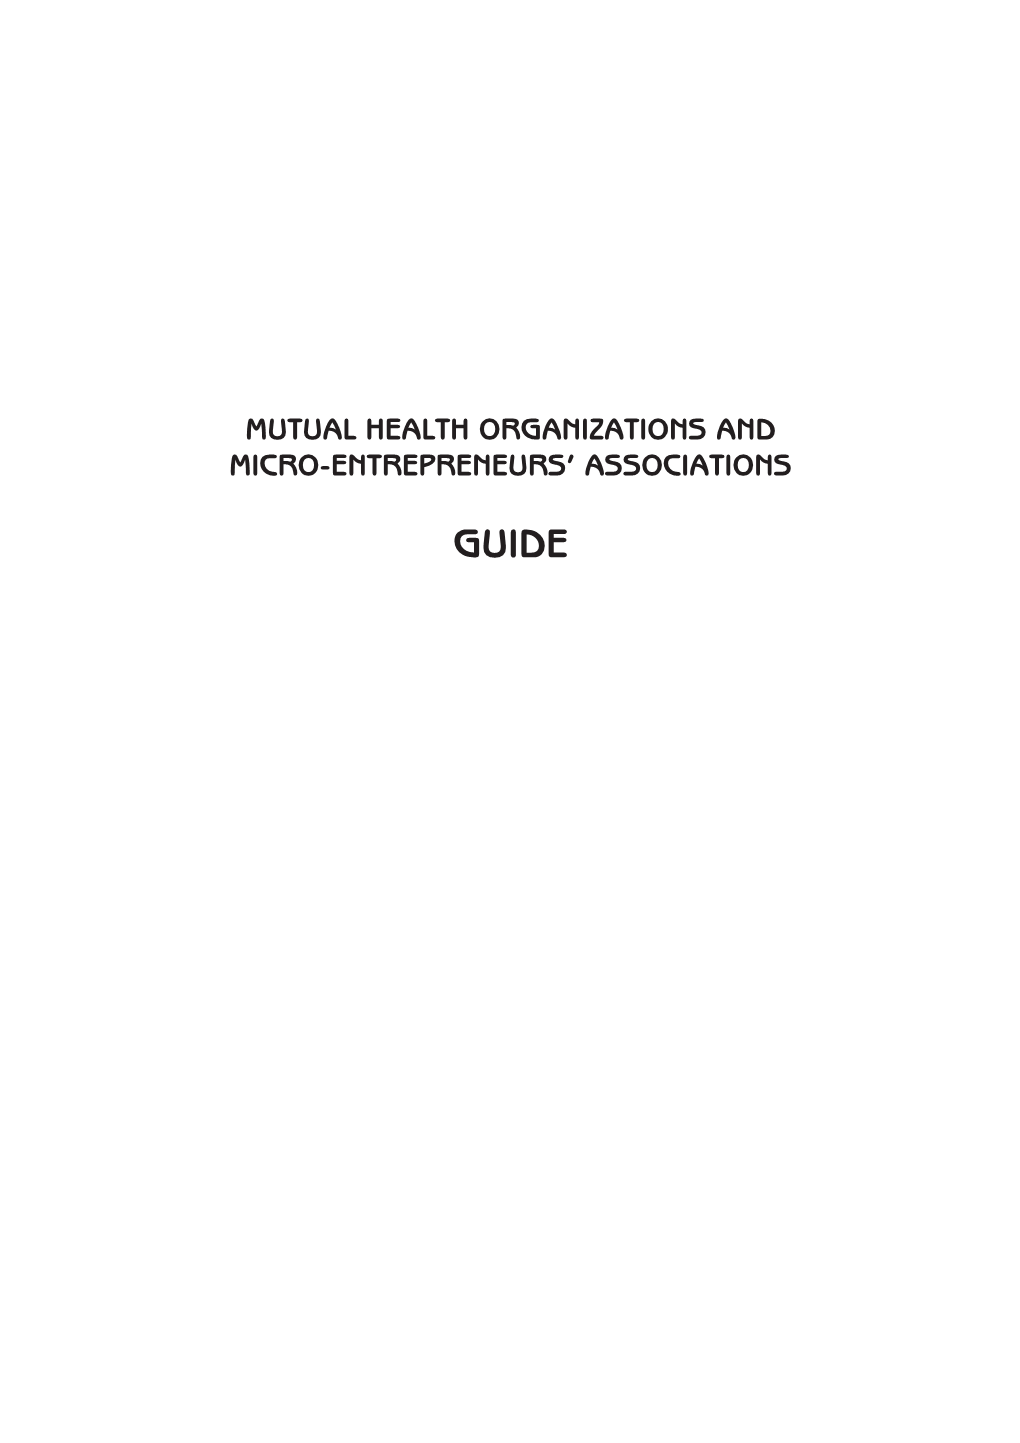 Mutual Health Organizations and Micro-Entrepreneurs’ Associations